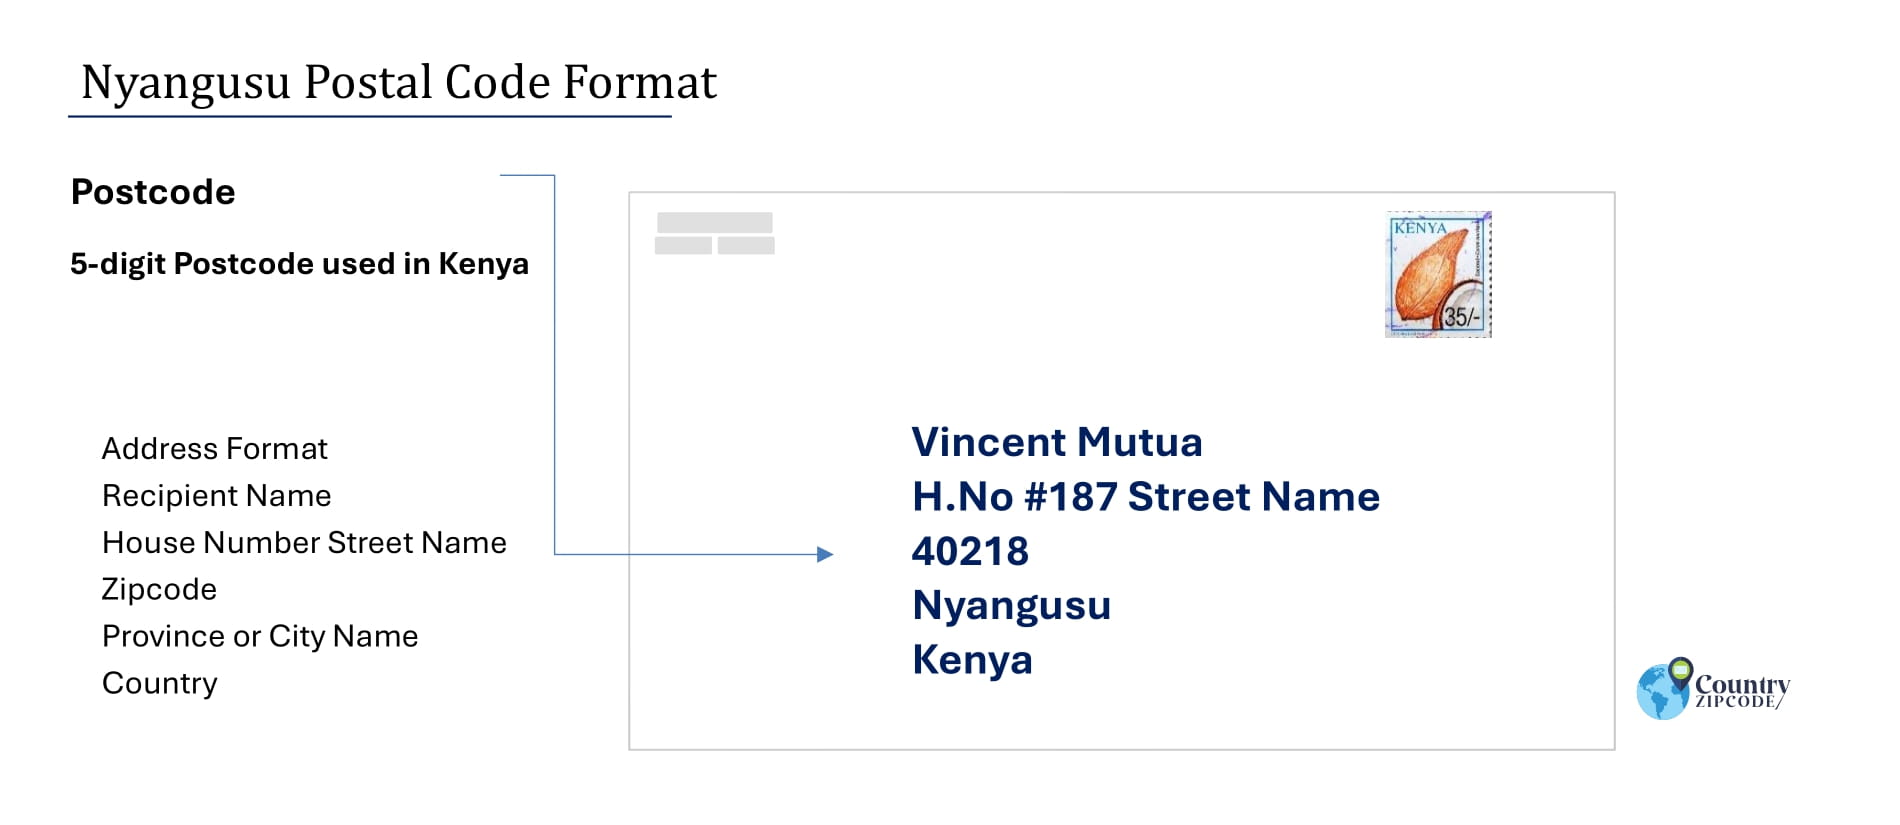 Example of Nyangusu Address and postal code format